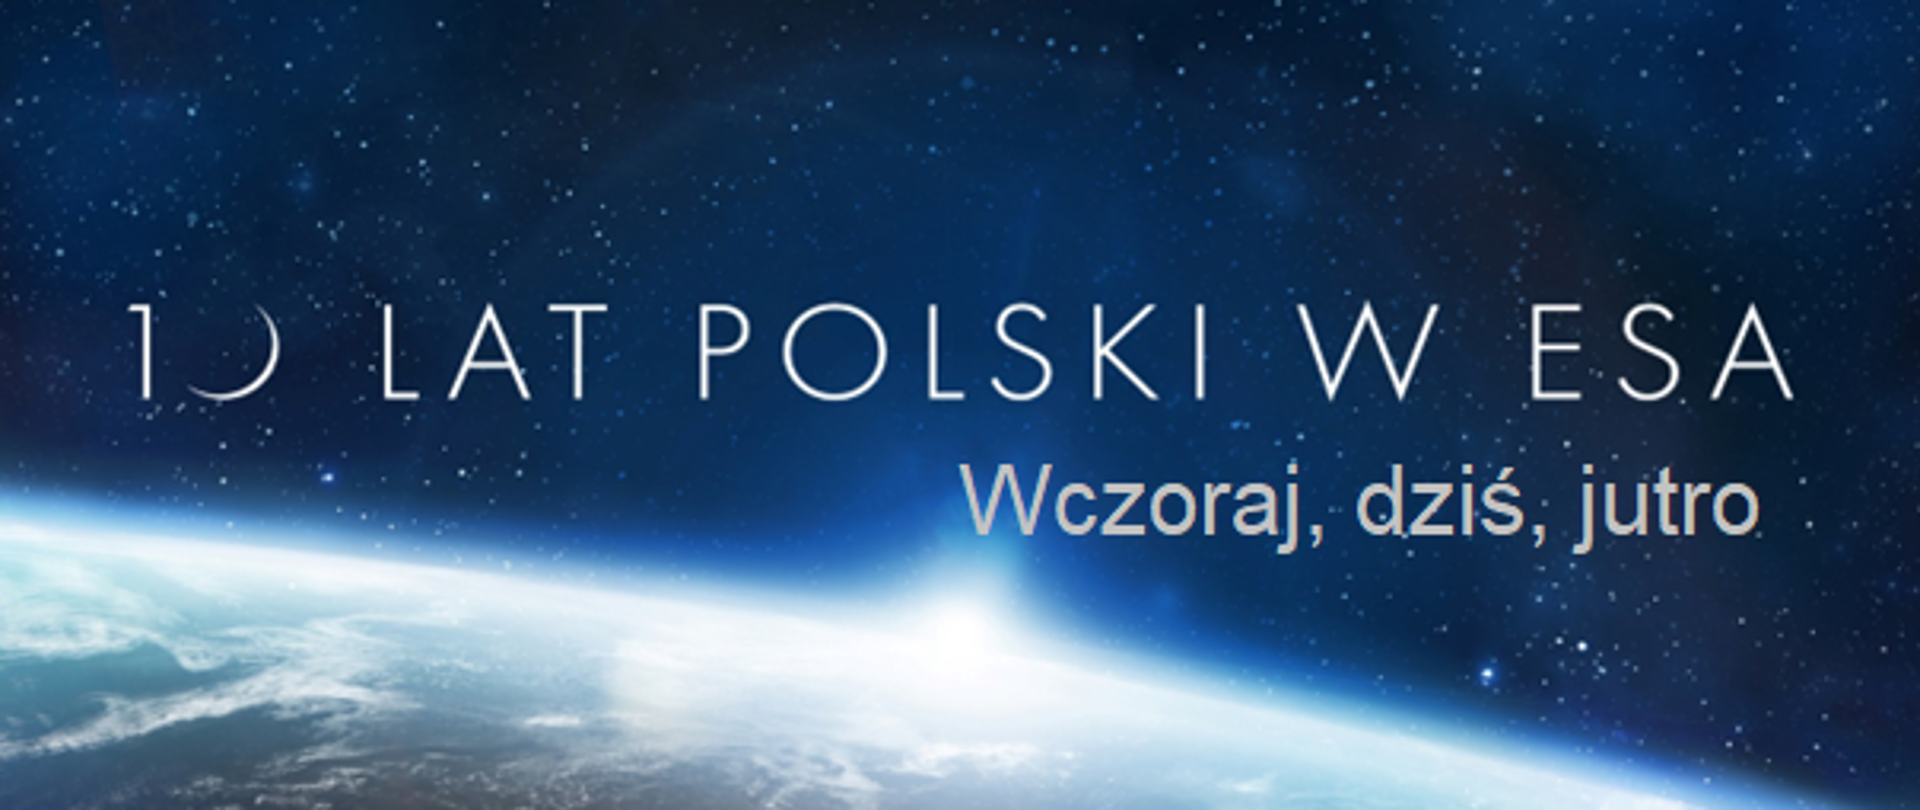 10 lat Polski w ESA